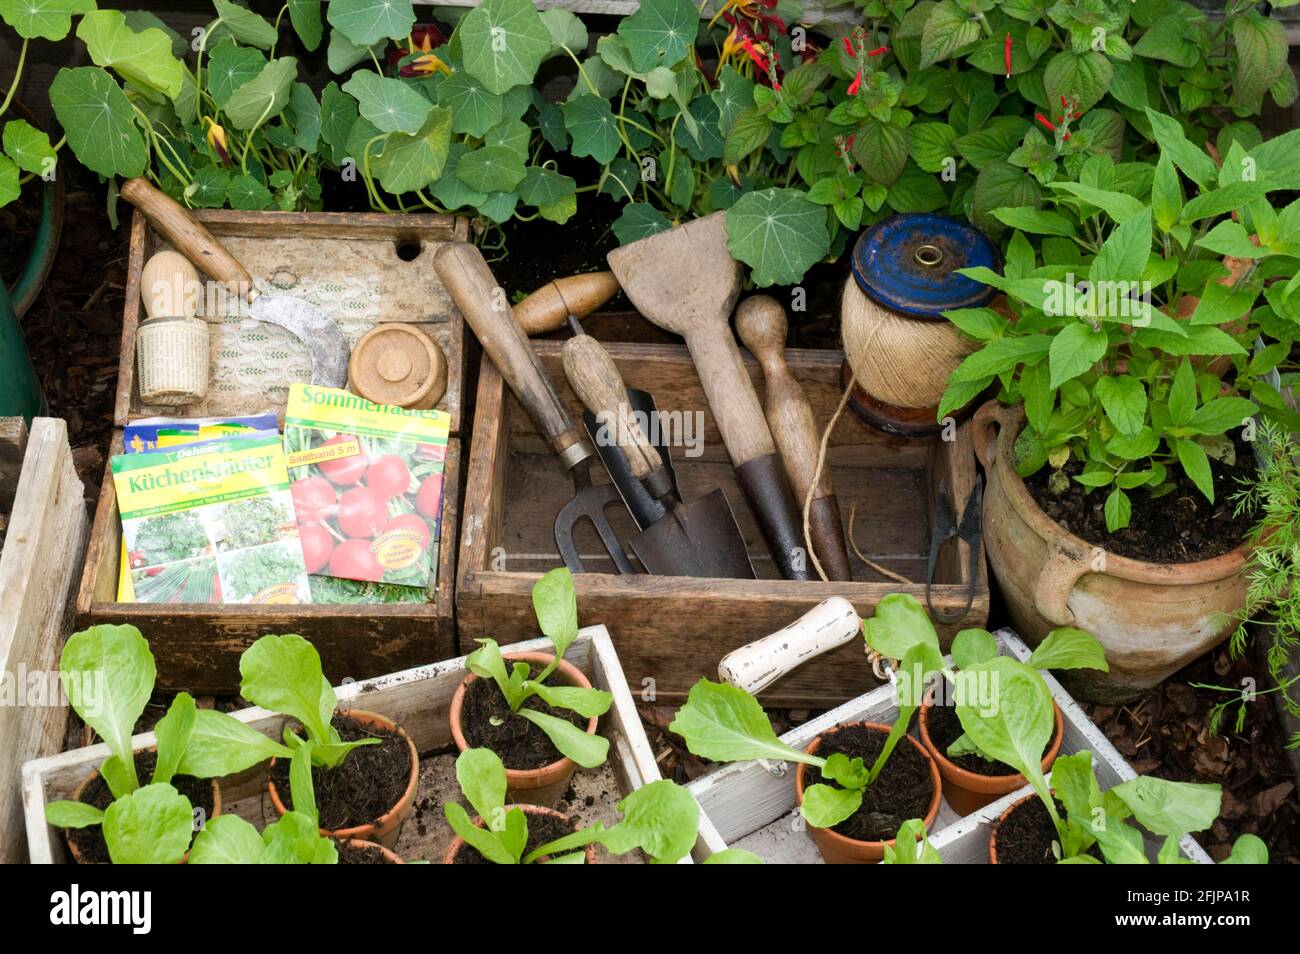 Garden with herbs Stock Photo